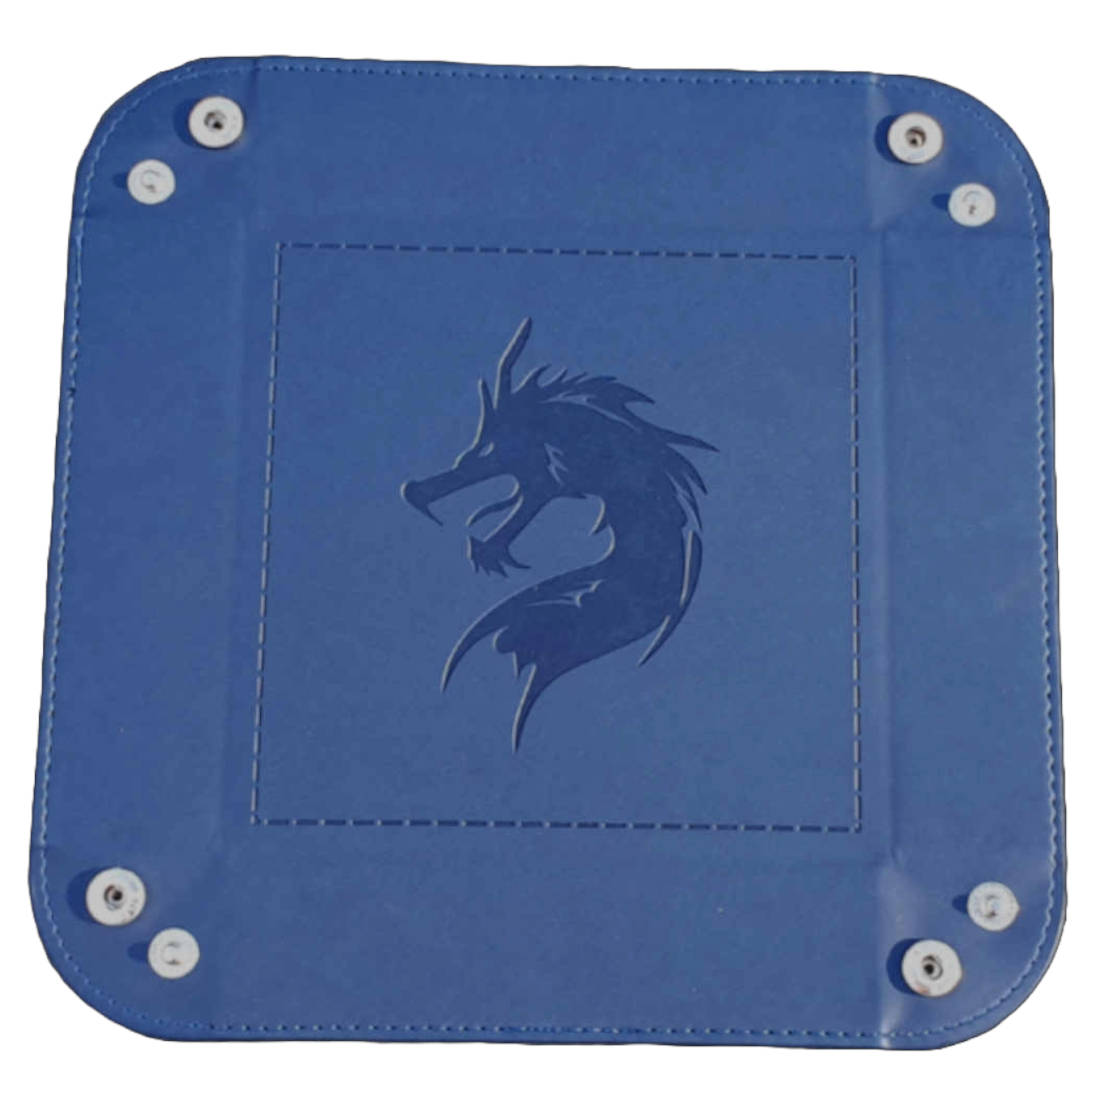 Dragon Dice Tray Folding Square blue